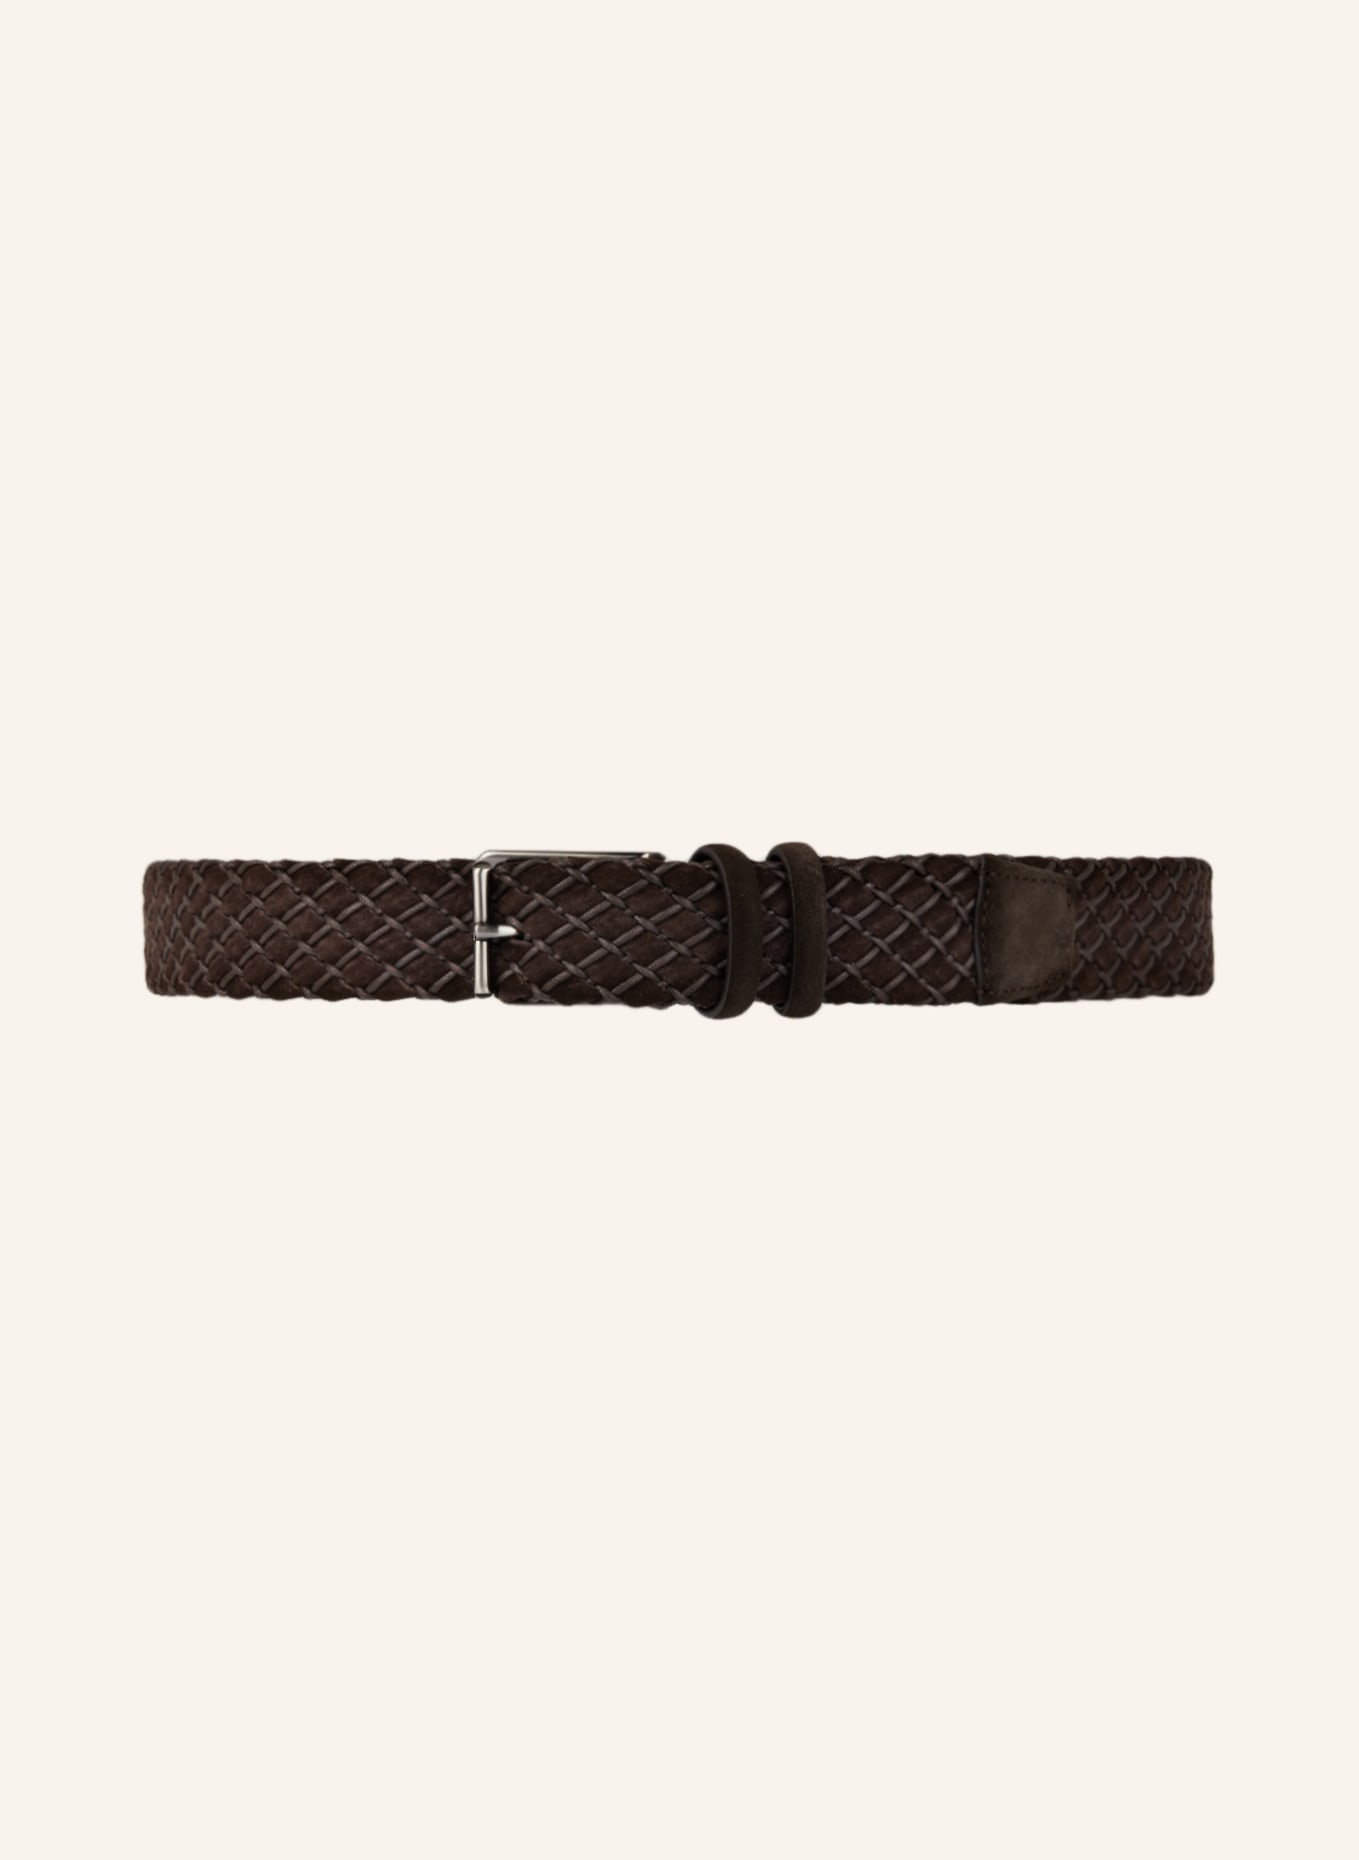 VENETA CINTURE Braided belt made of leather, Color: BROWN (Image 2)